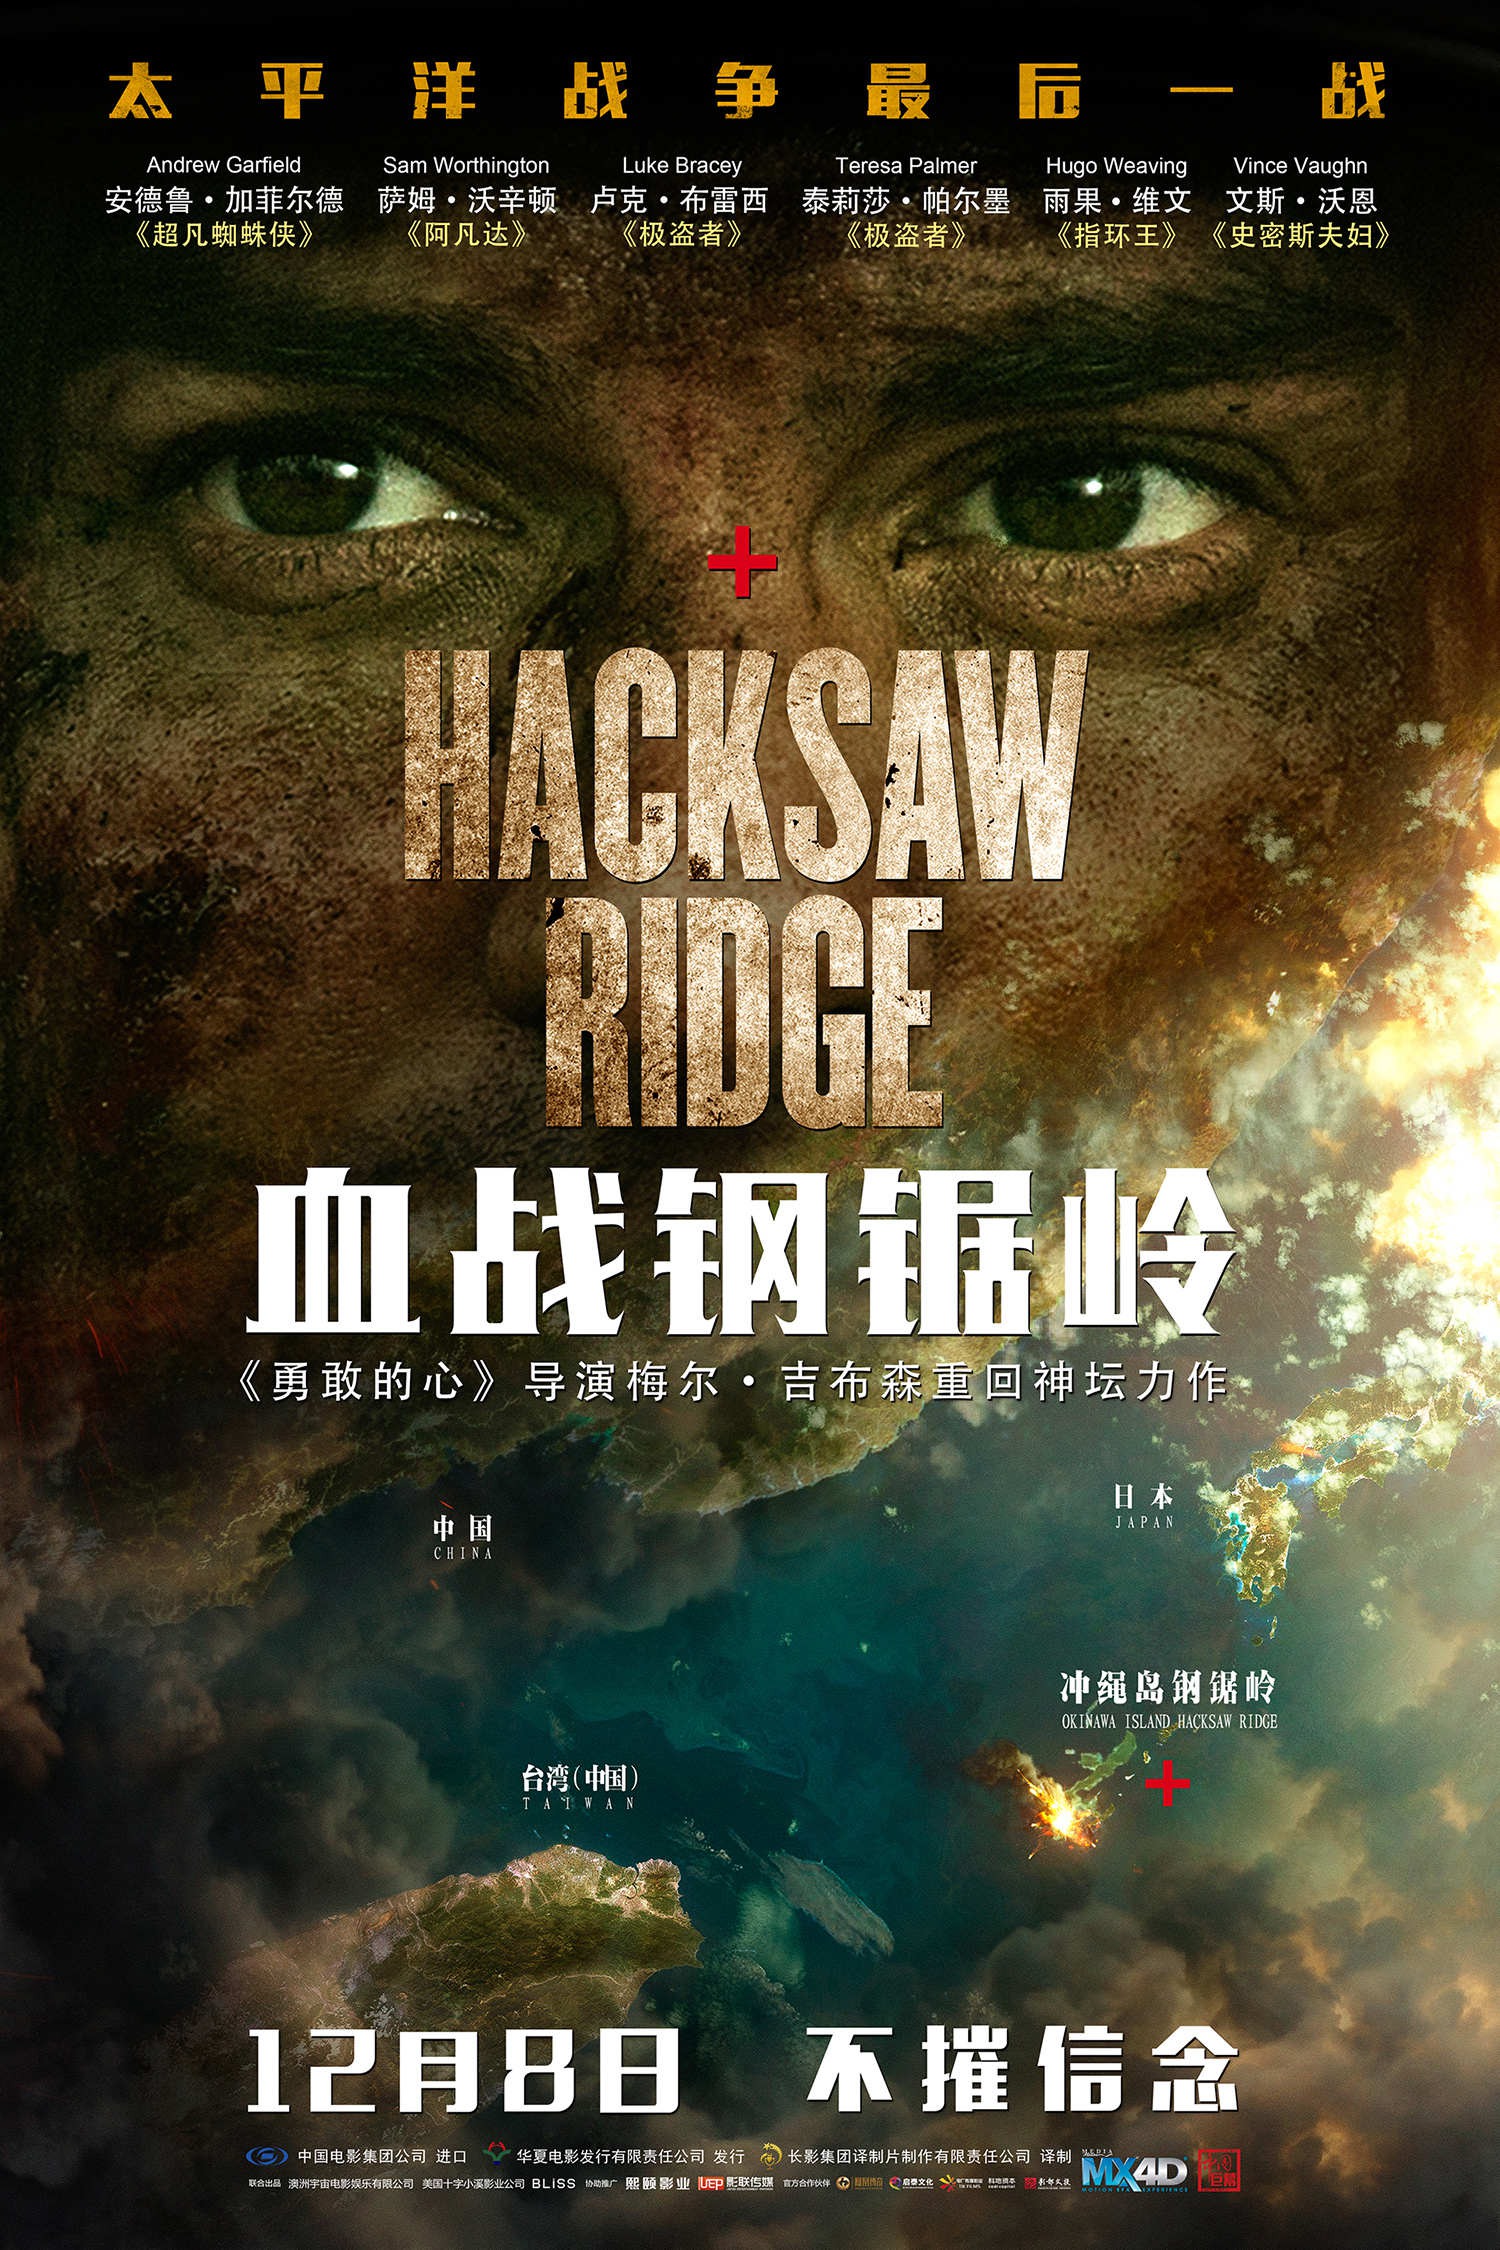 Mega Sized Movie Poster Image for Hacksaw Ridge (#17 of 19)